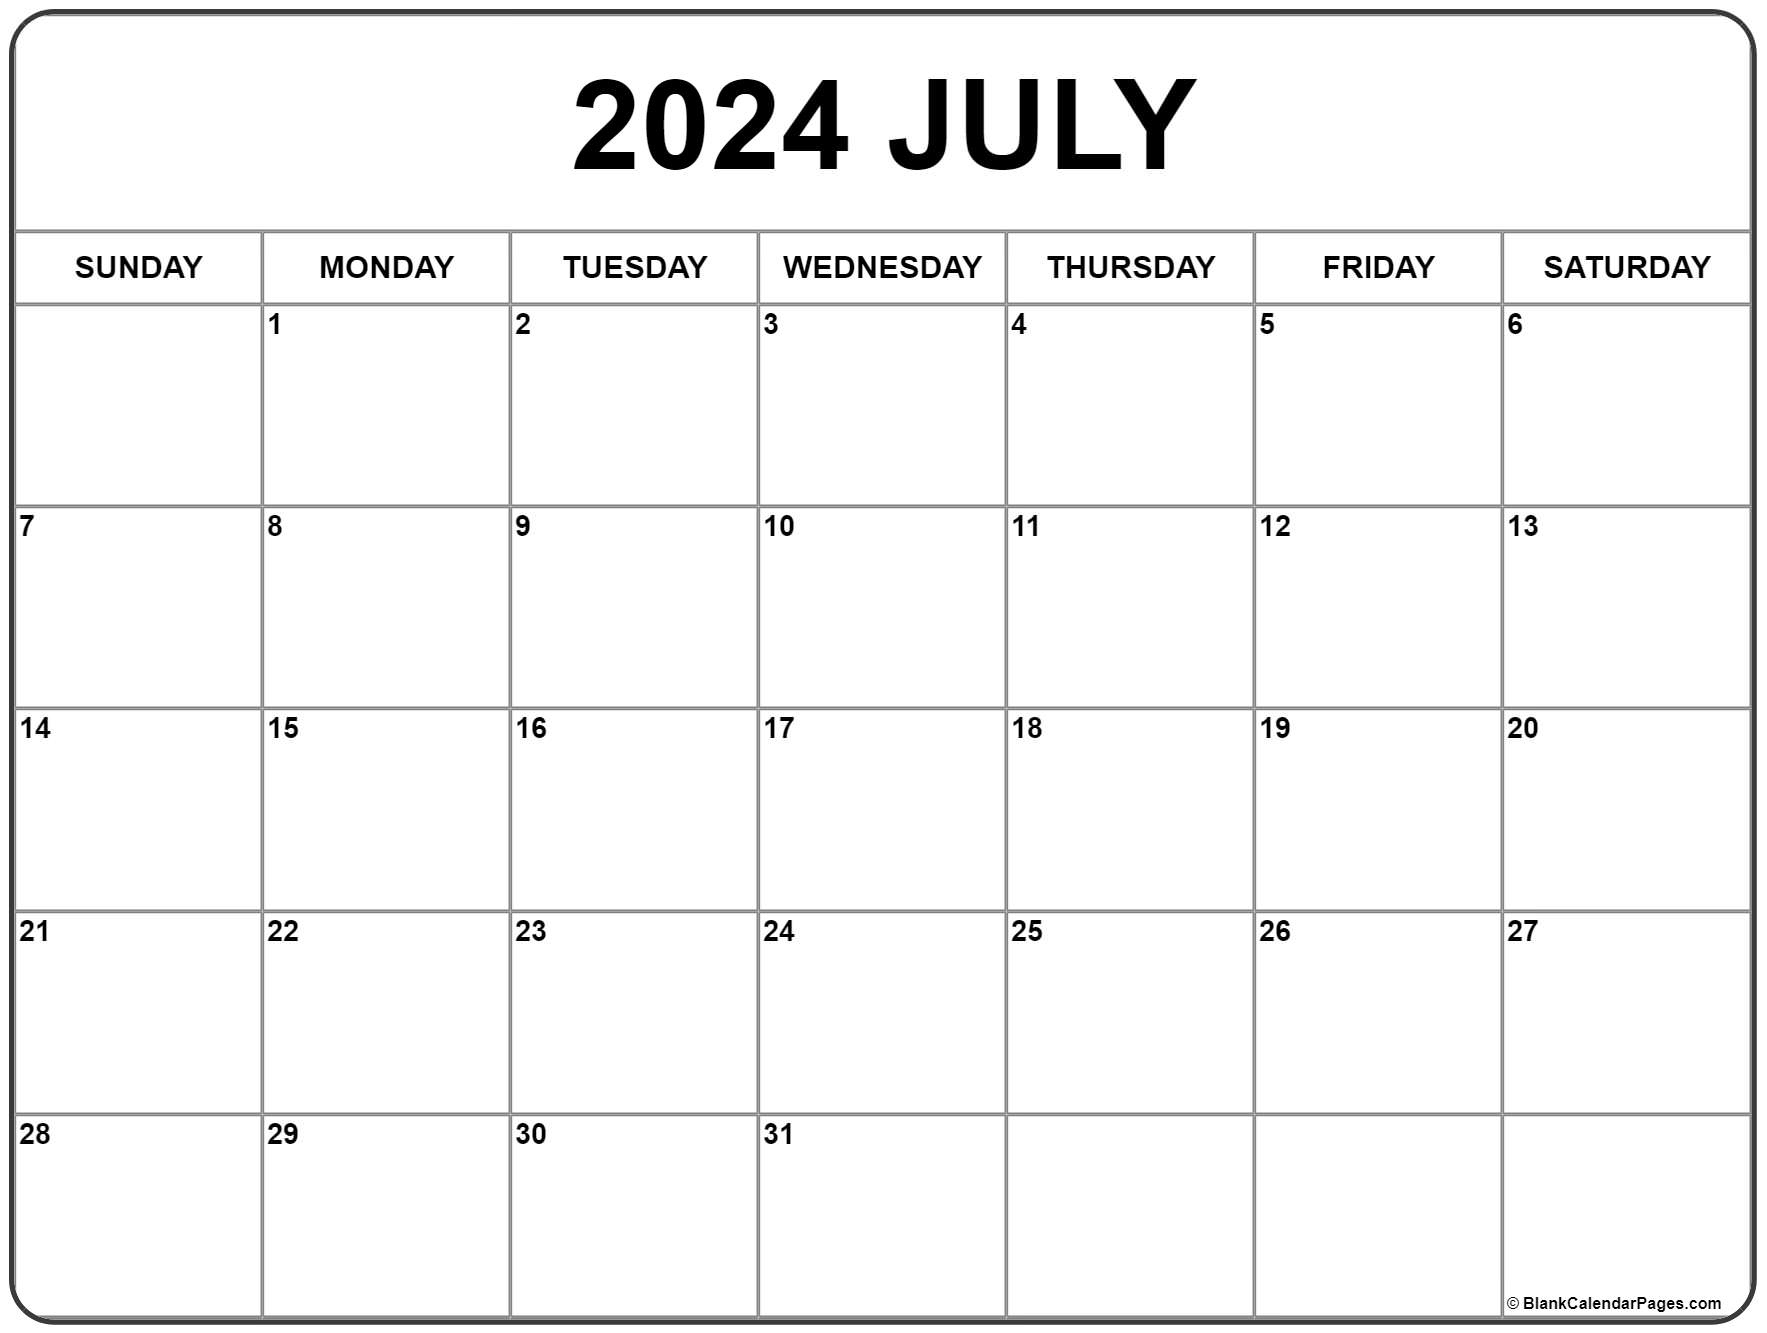 July 2024 Calendar | Free Printable Calendar | Printable Monthly Calendar 2024 July